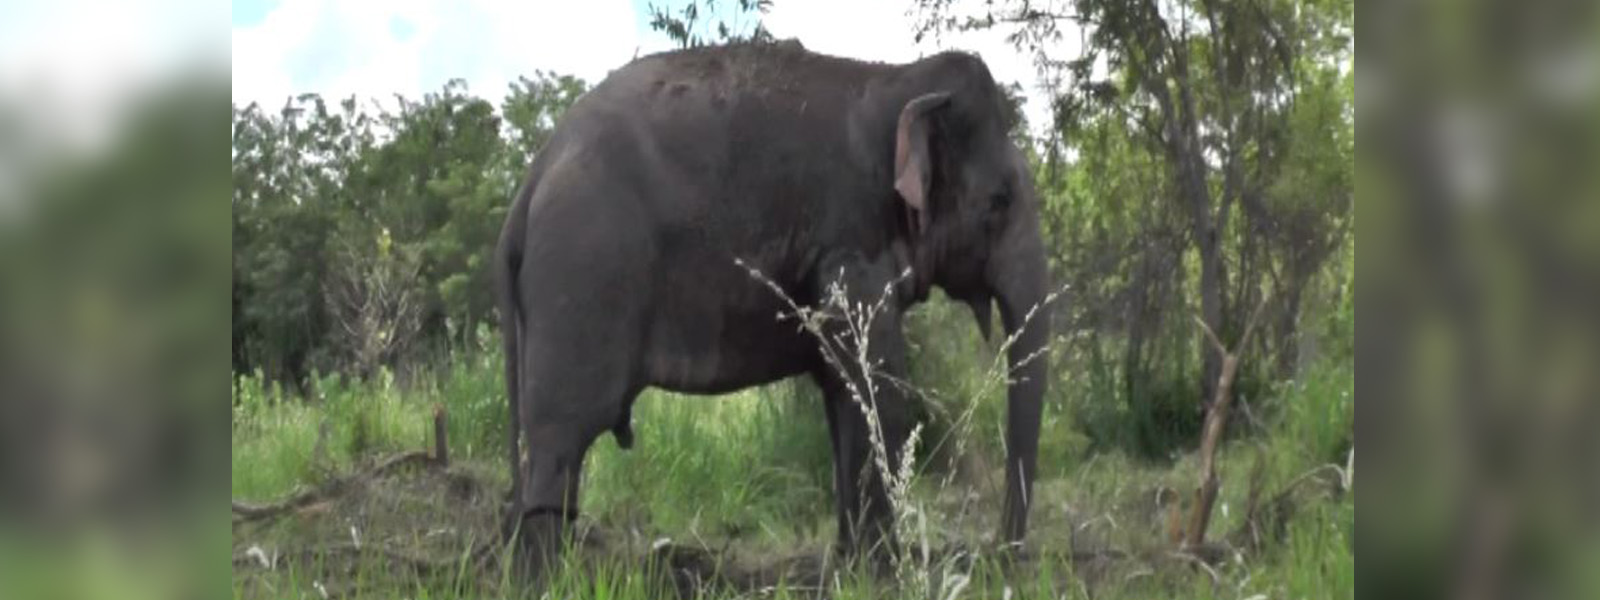 Wild elephant captured in Aselapura